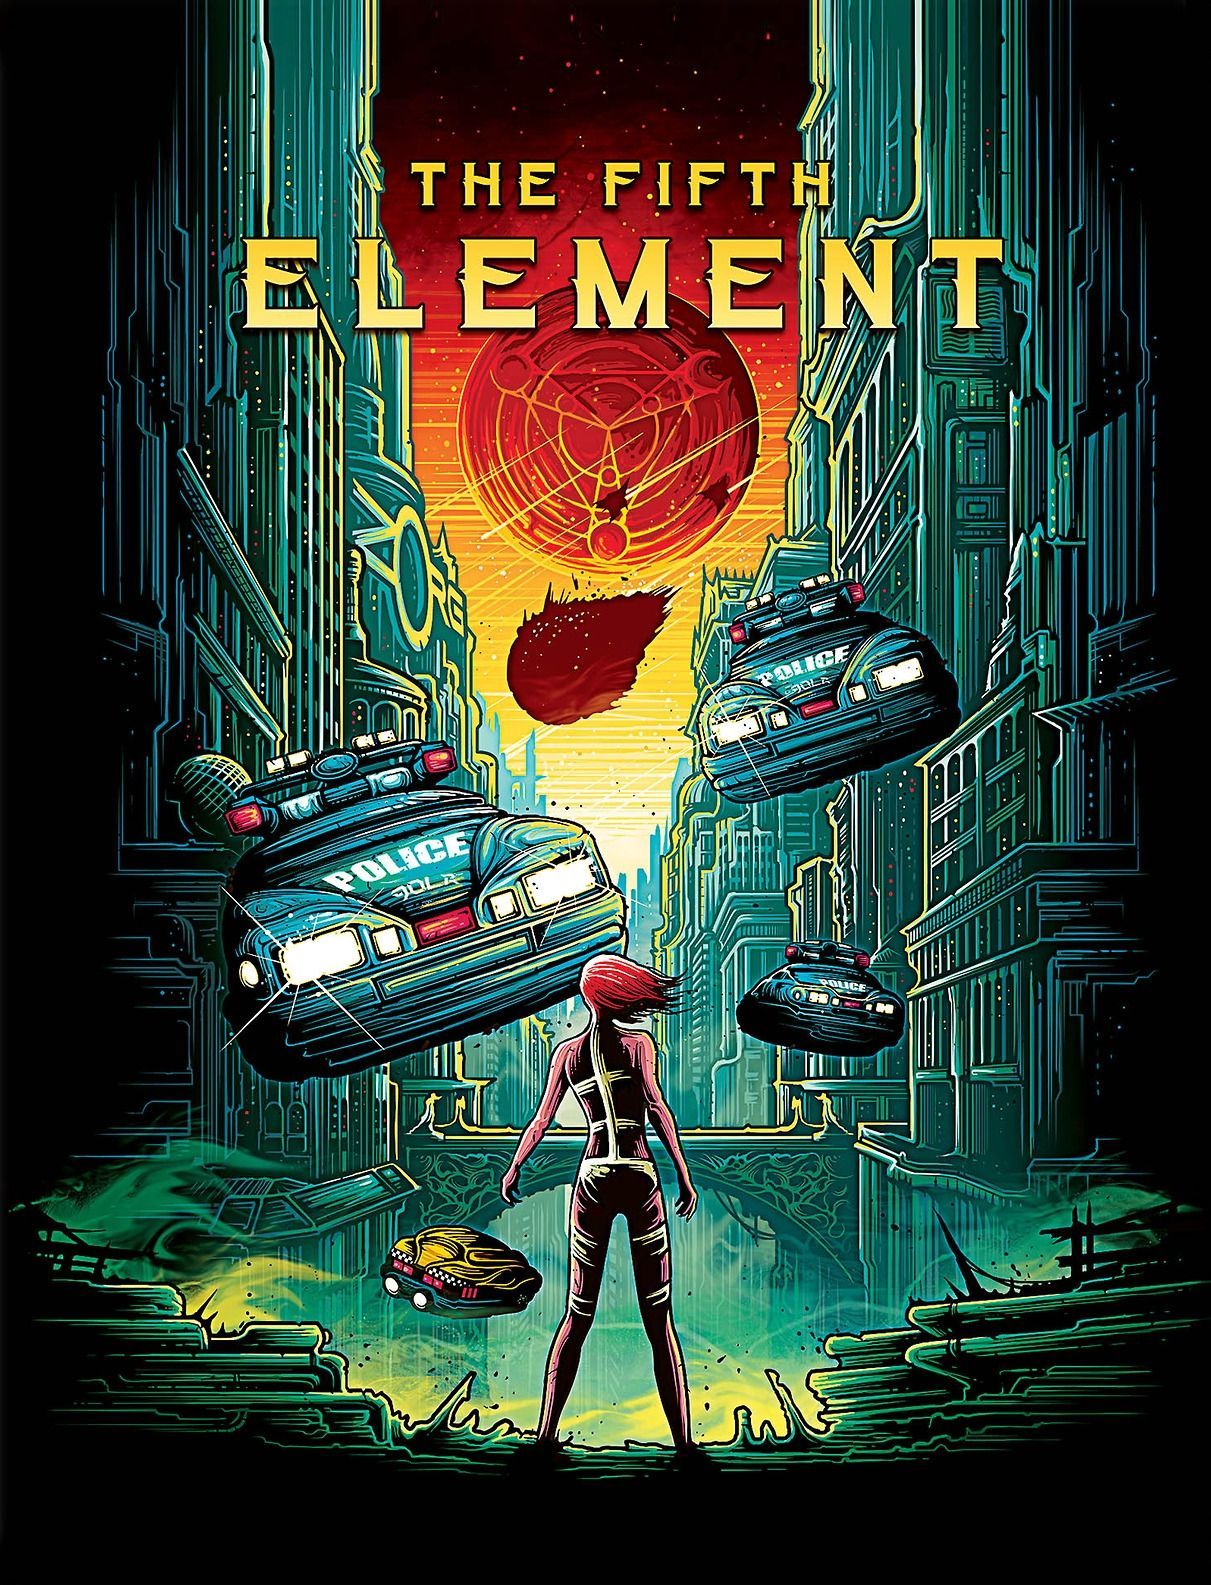 The Fifth Element by Dan Mumford